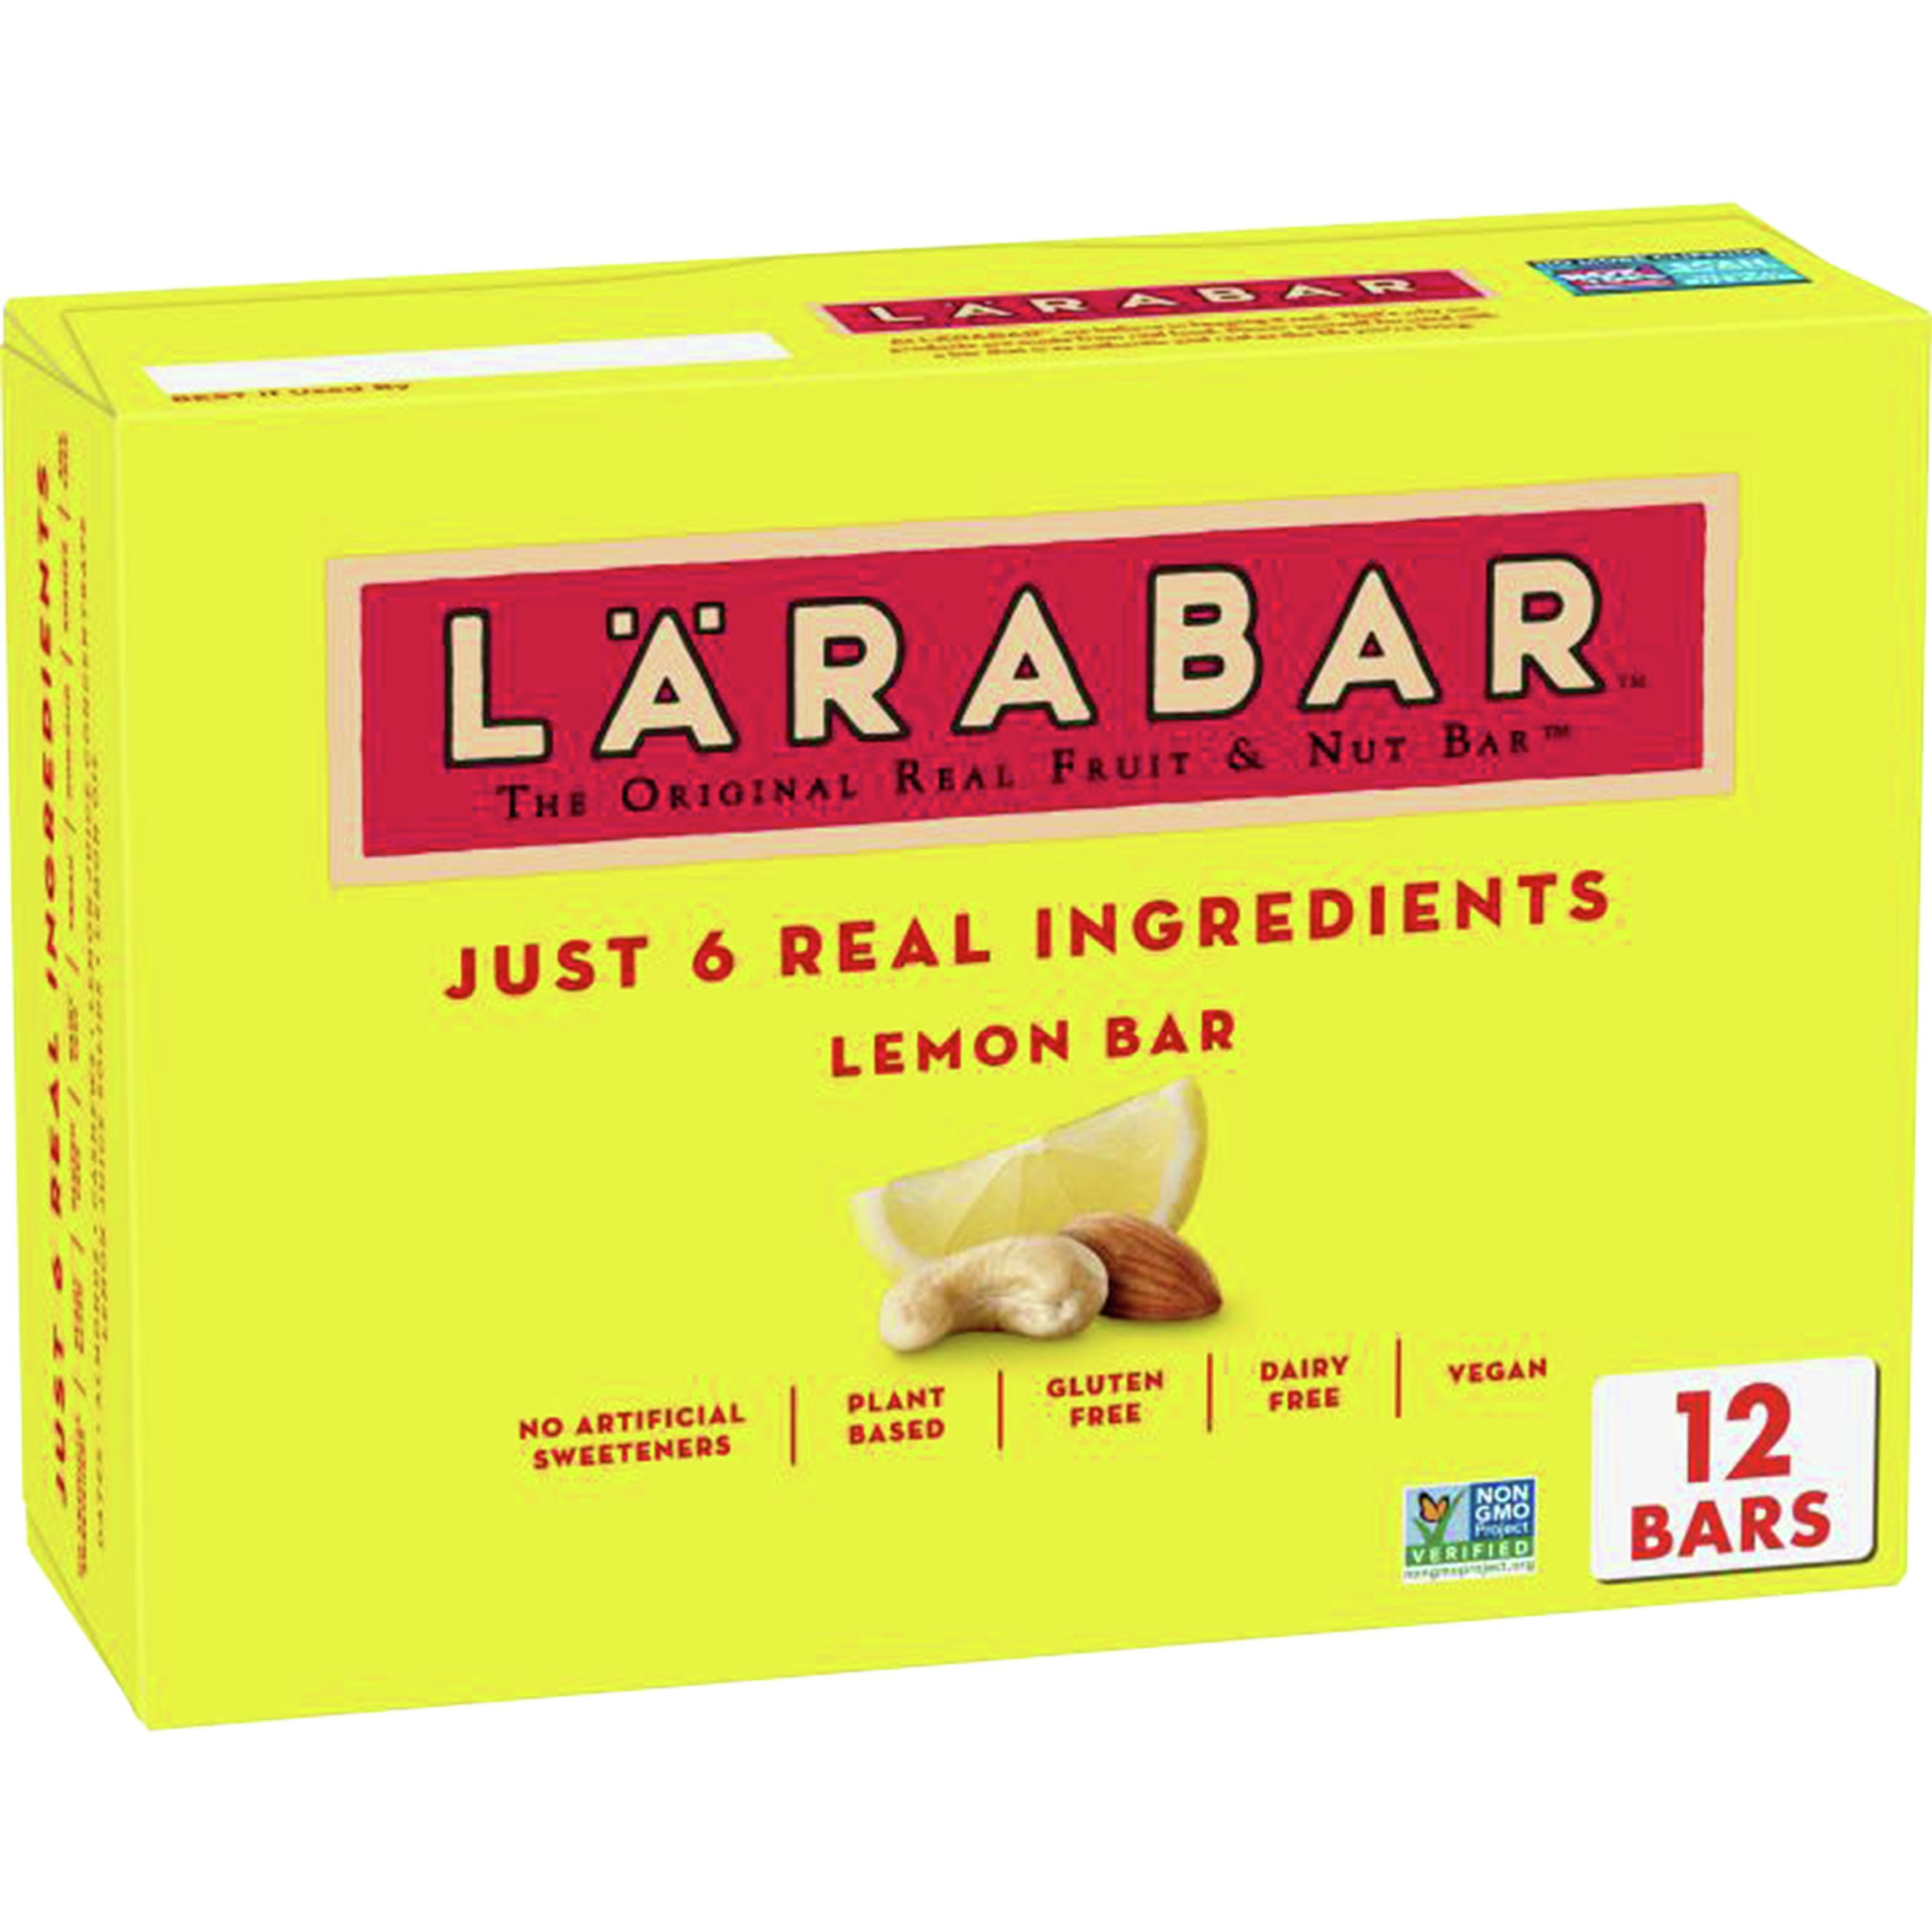 Larabar Lemon Bar, Gluten Free Vegan Fruit & Nut Bars, 1.6 oz bars, 12 ct